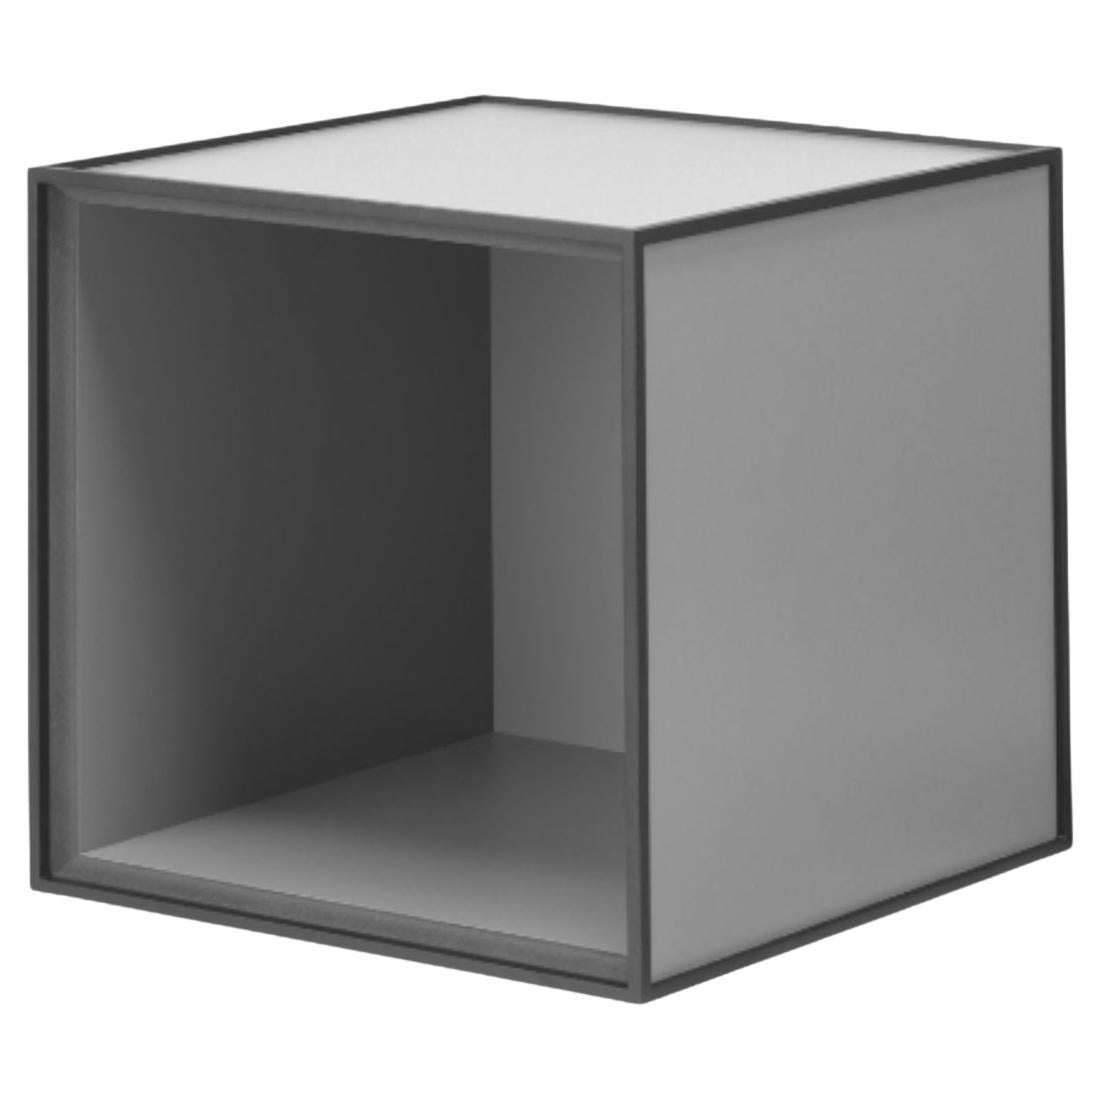 28 Dark Grey Frame Box by Lassen